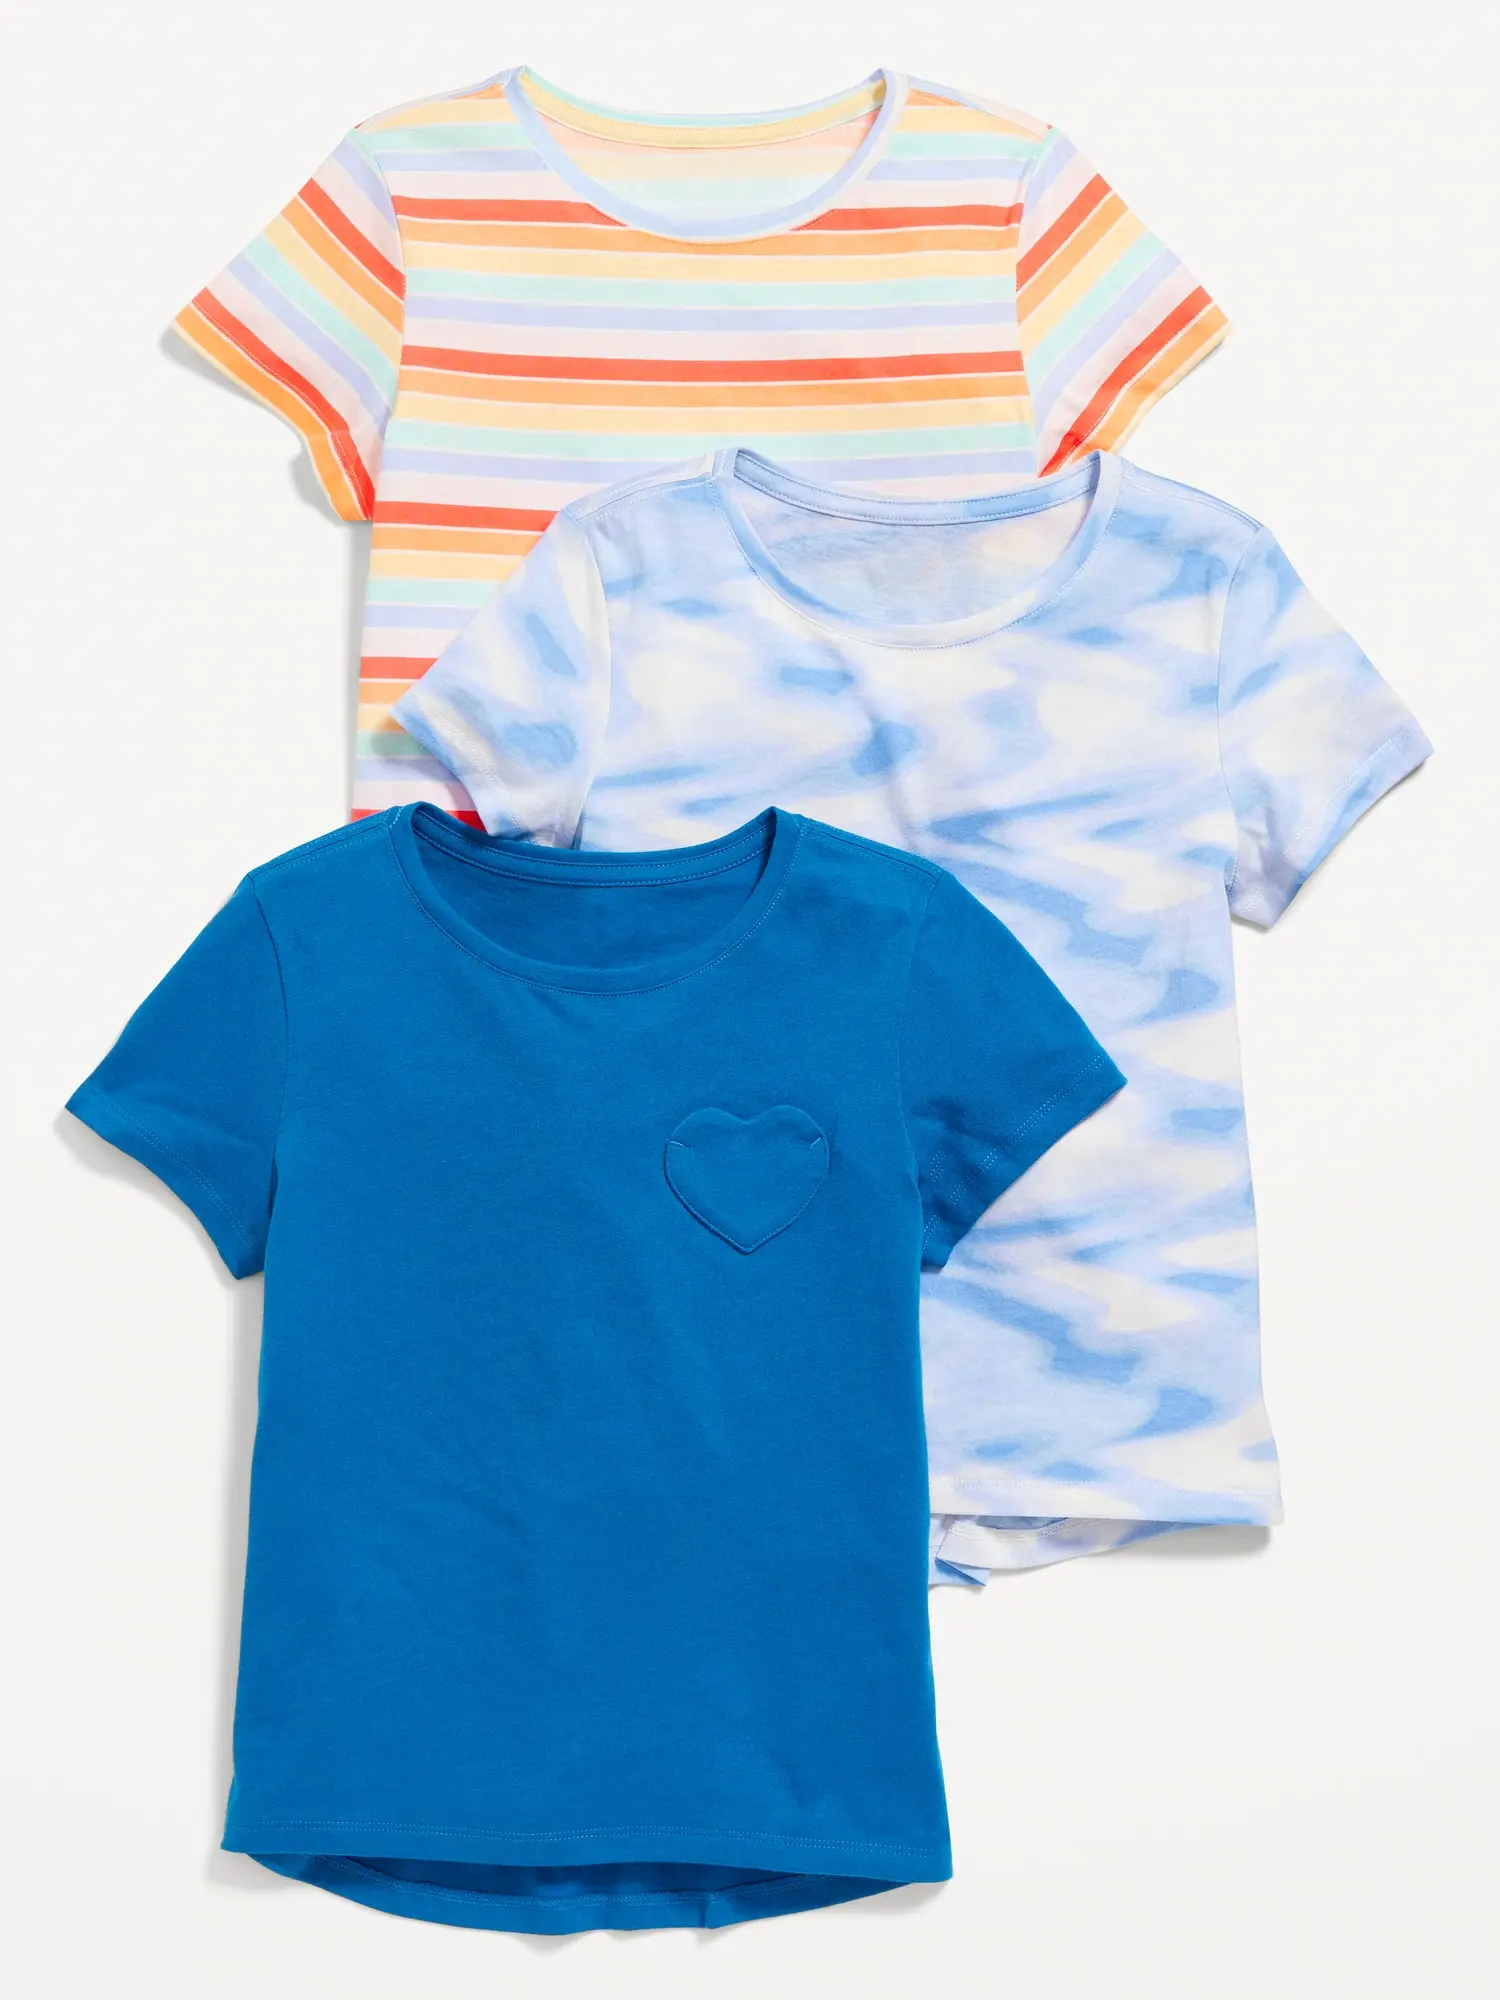 Old Navy Softest Short-Sleeve T-Shirt Variety 3-Pack for Girls multi. 1